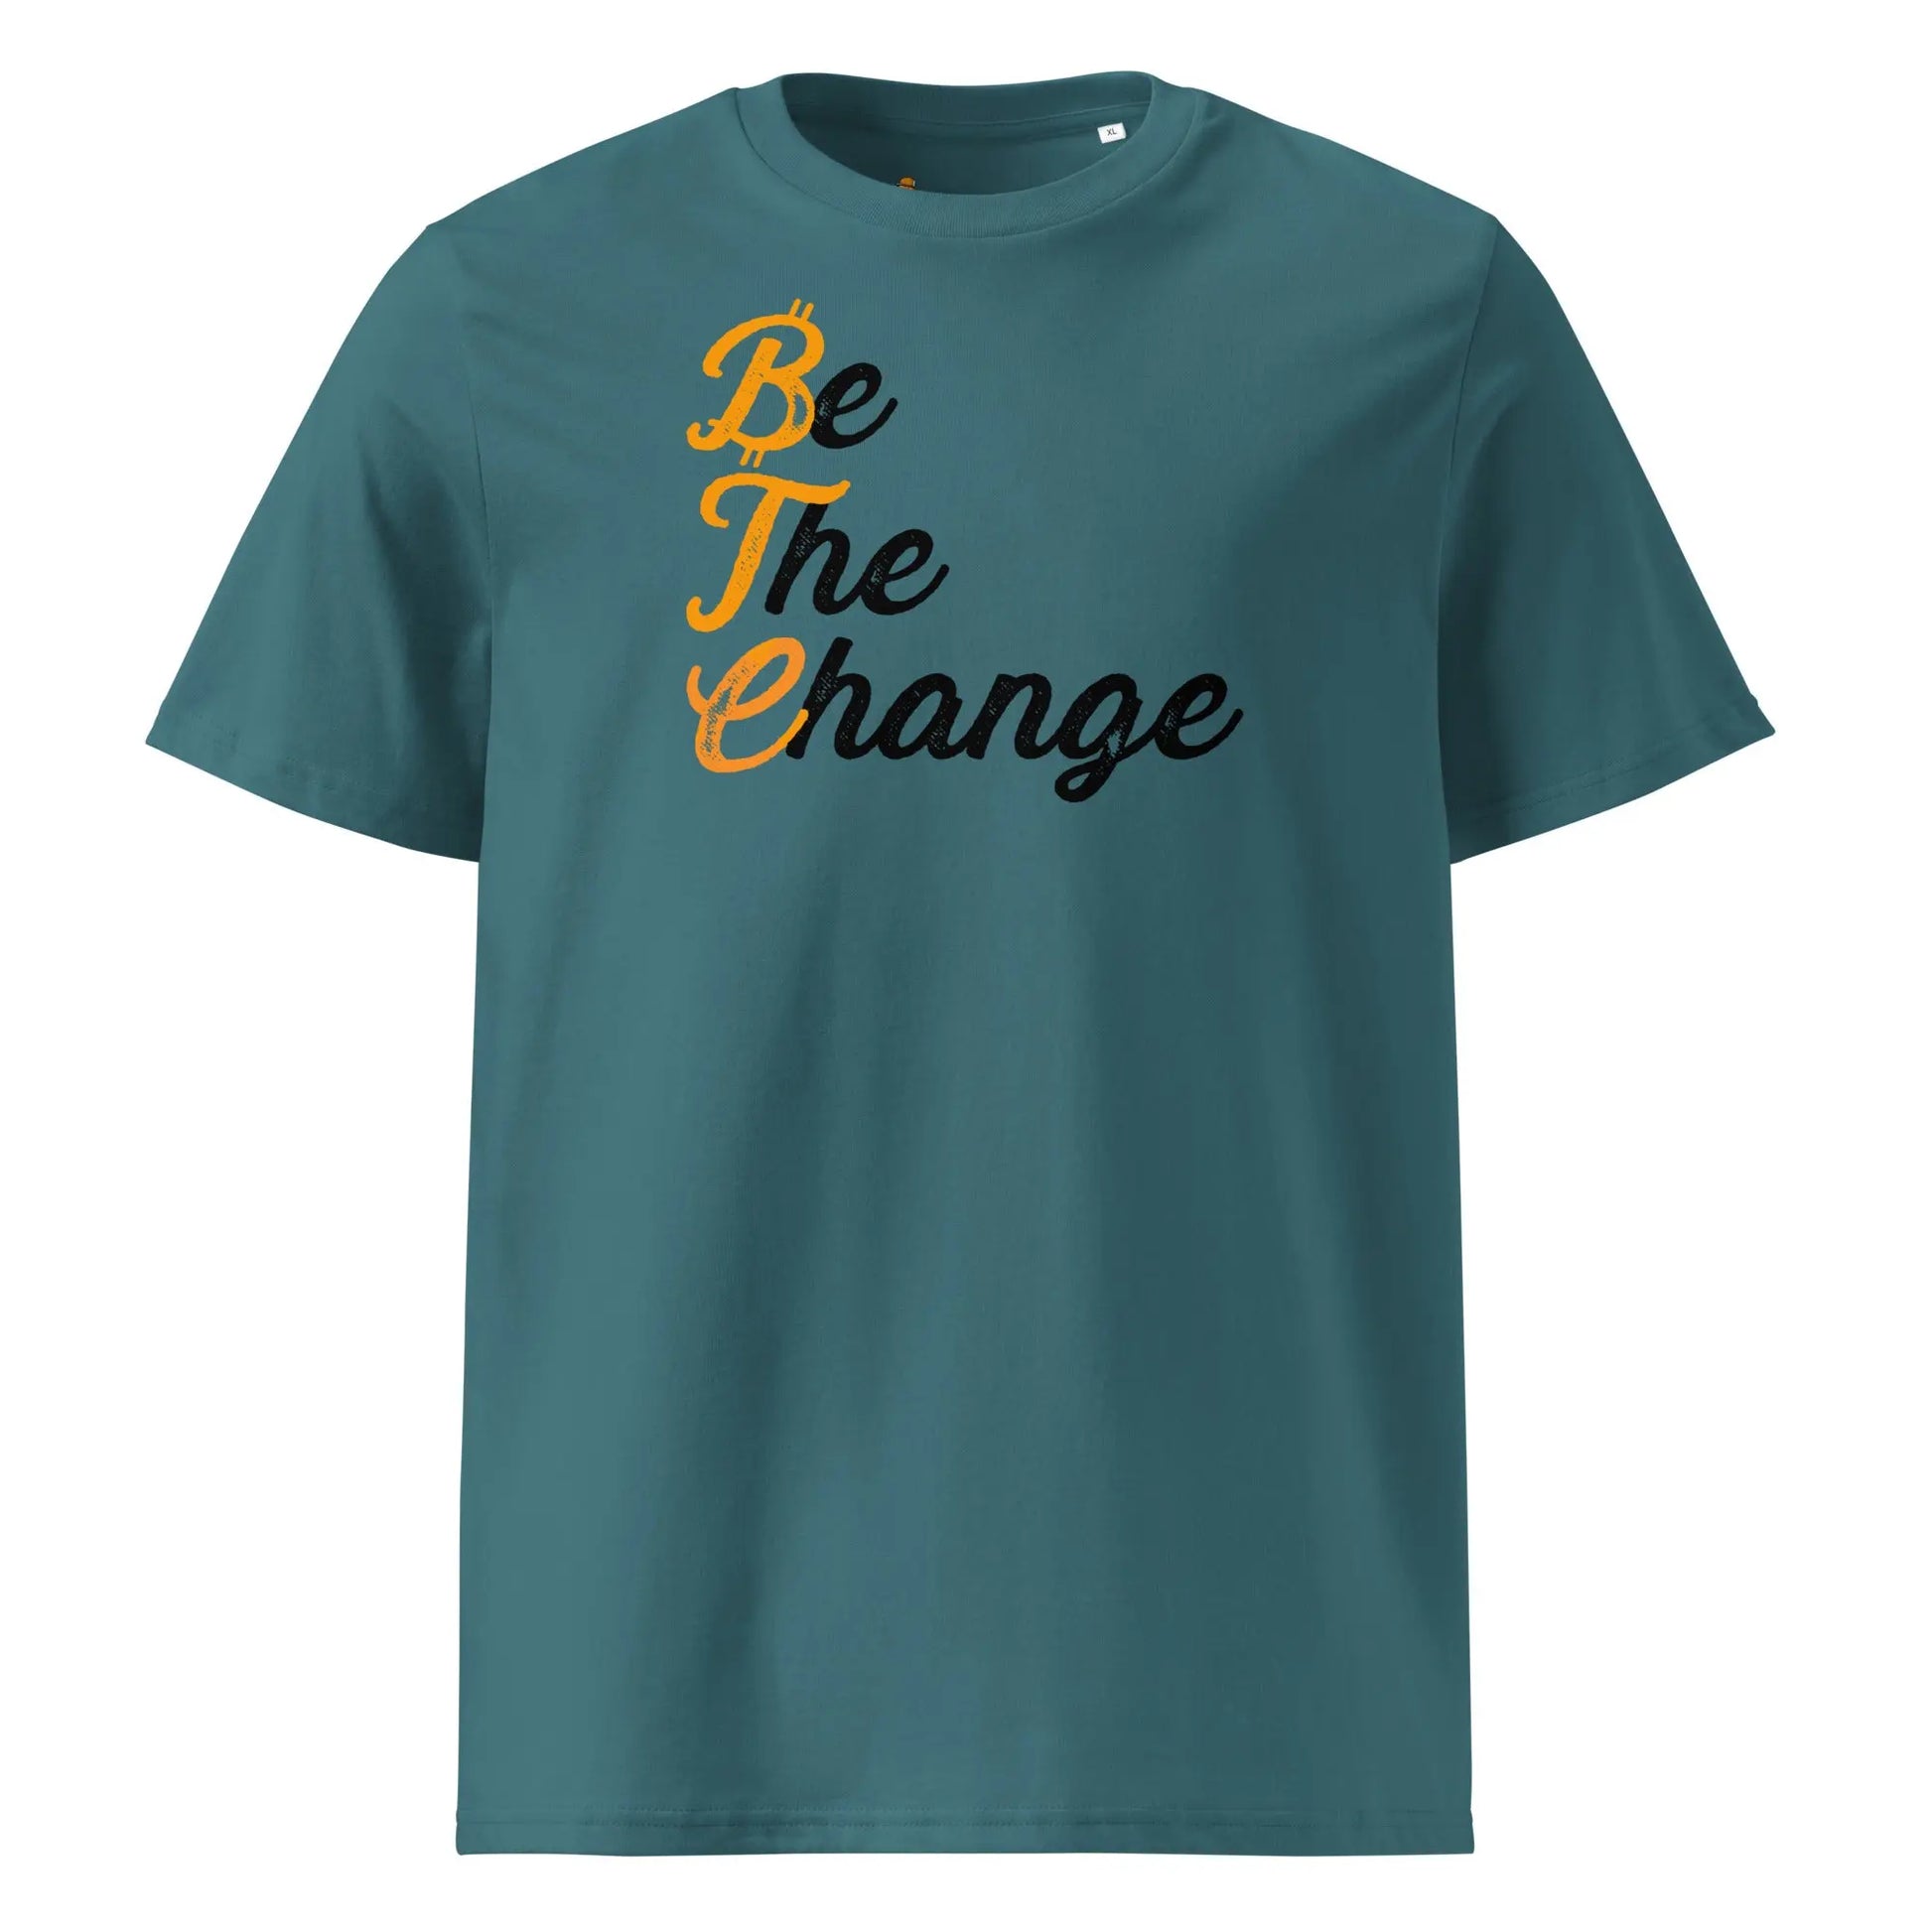 Be The Change - Premium Unisex Organic Cotton Bitcoin T-shirt Green Color